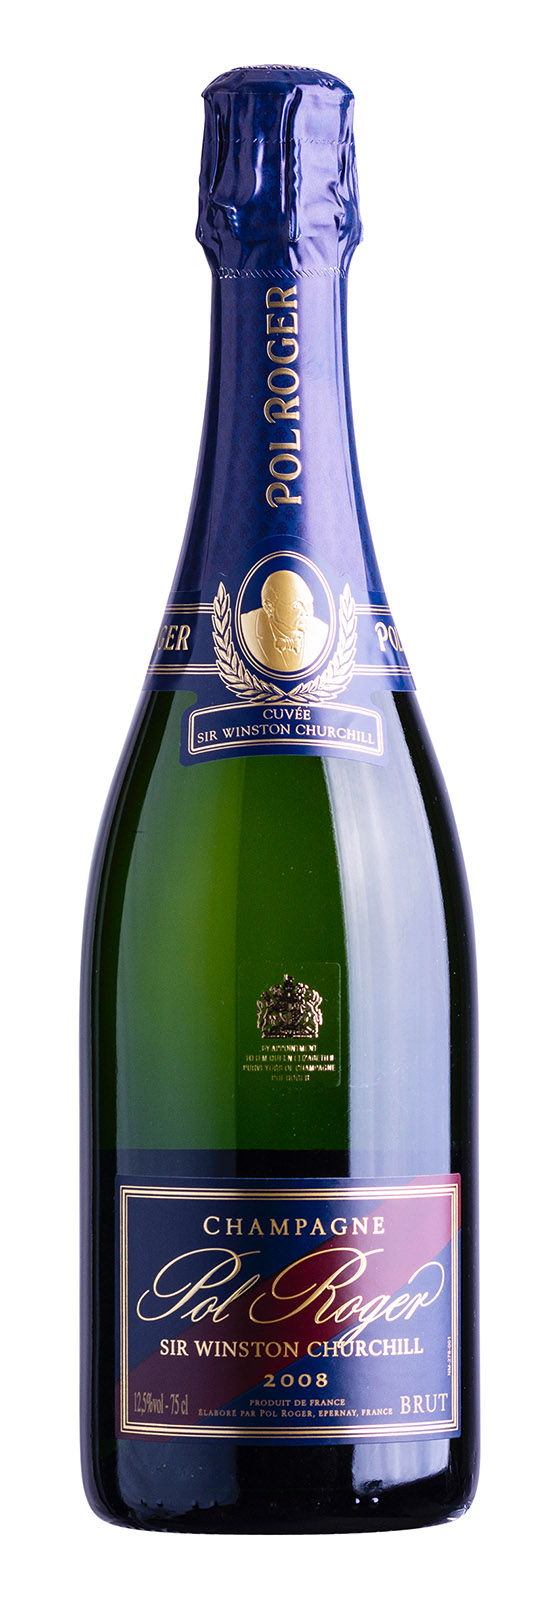 Champagne AOC Sir Winston Churchill Brut 2008